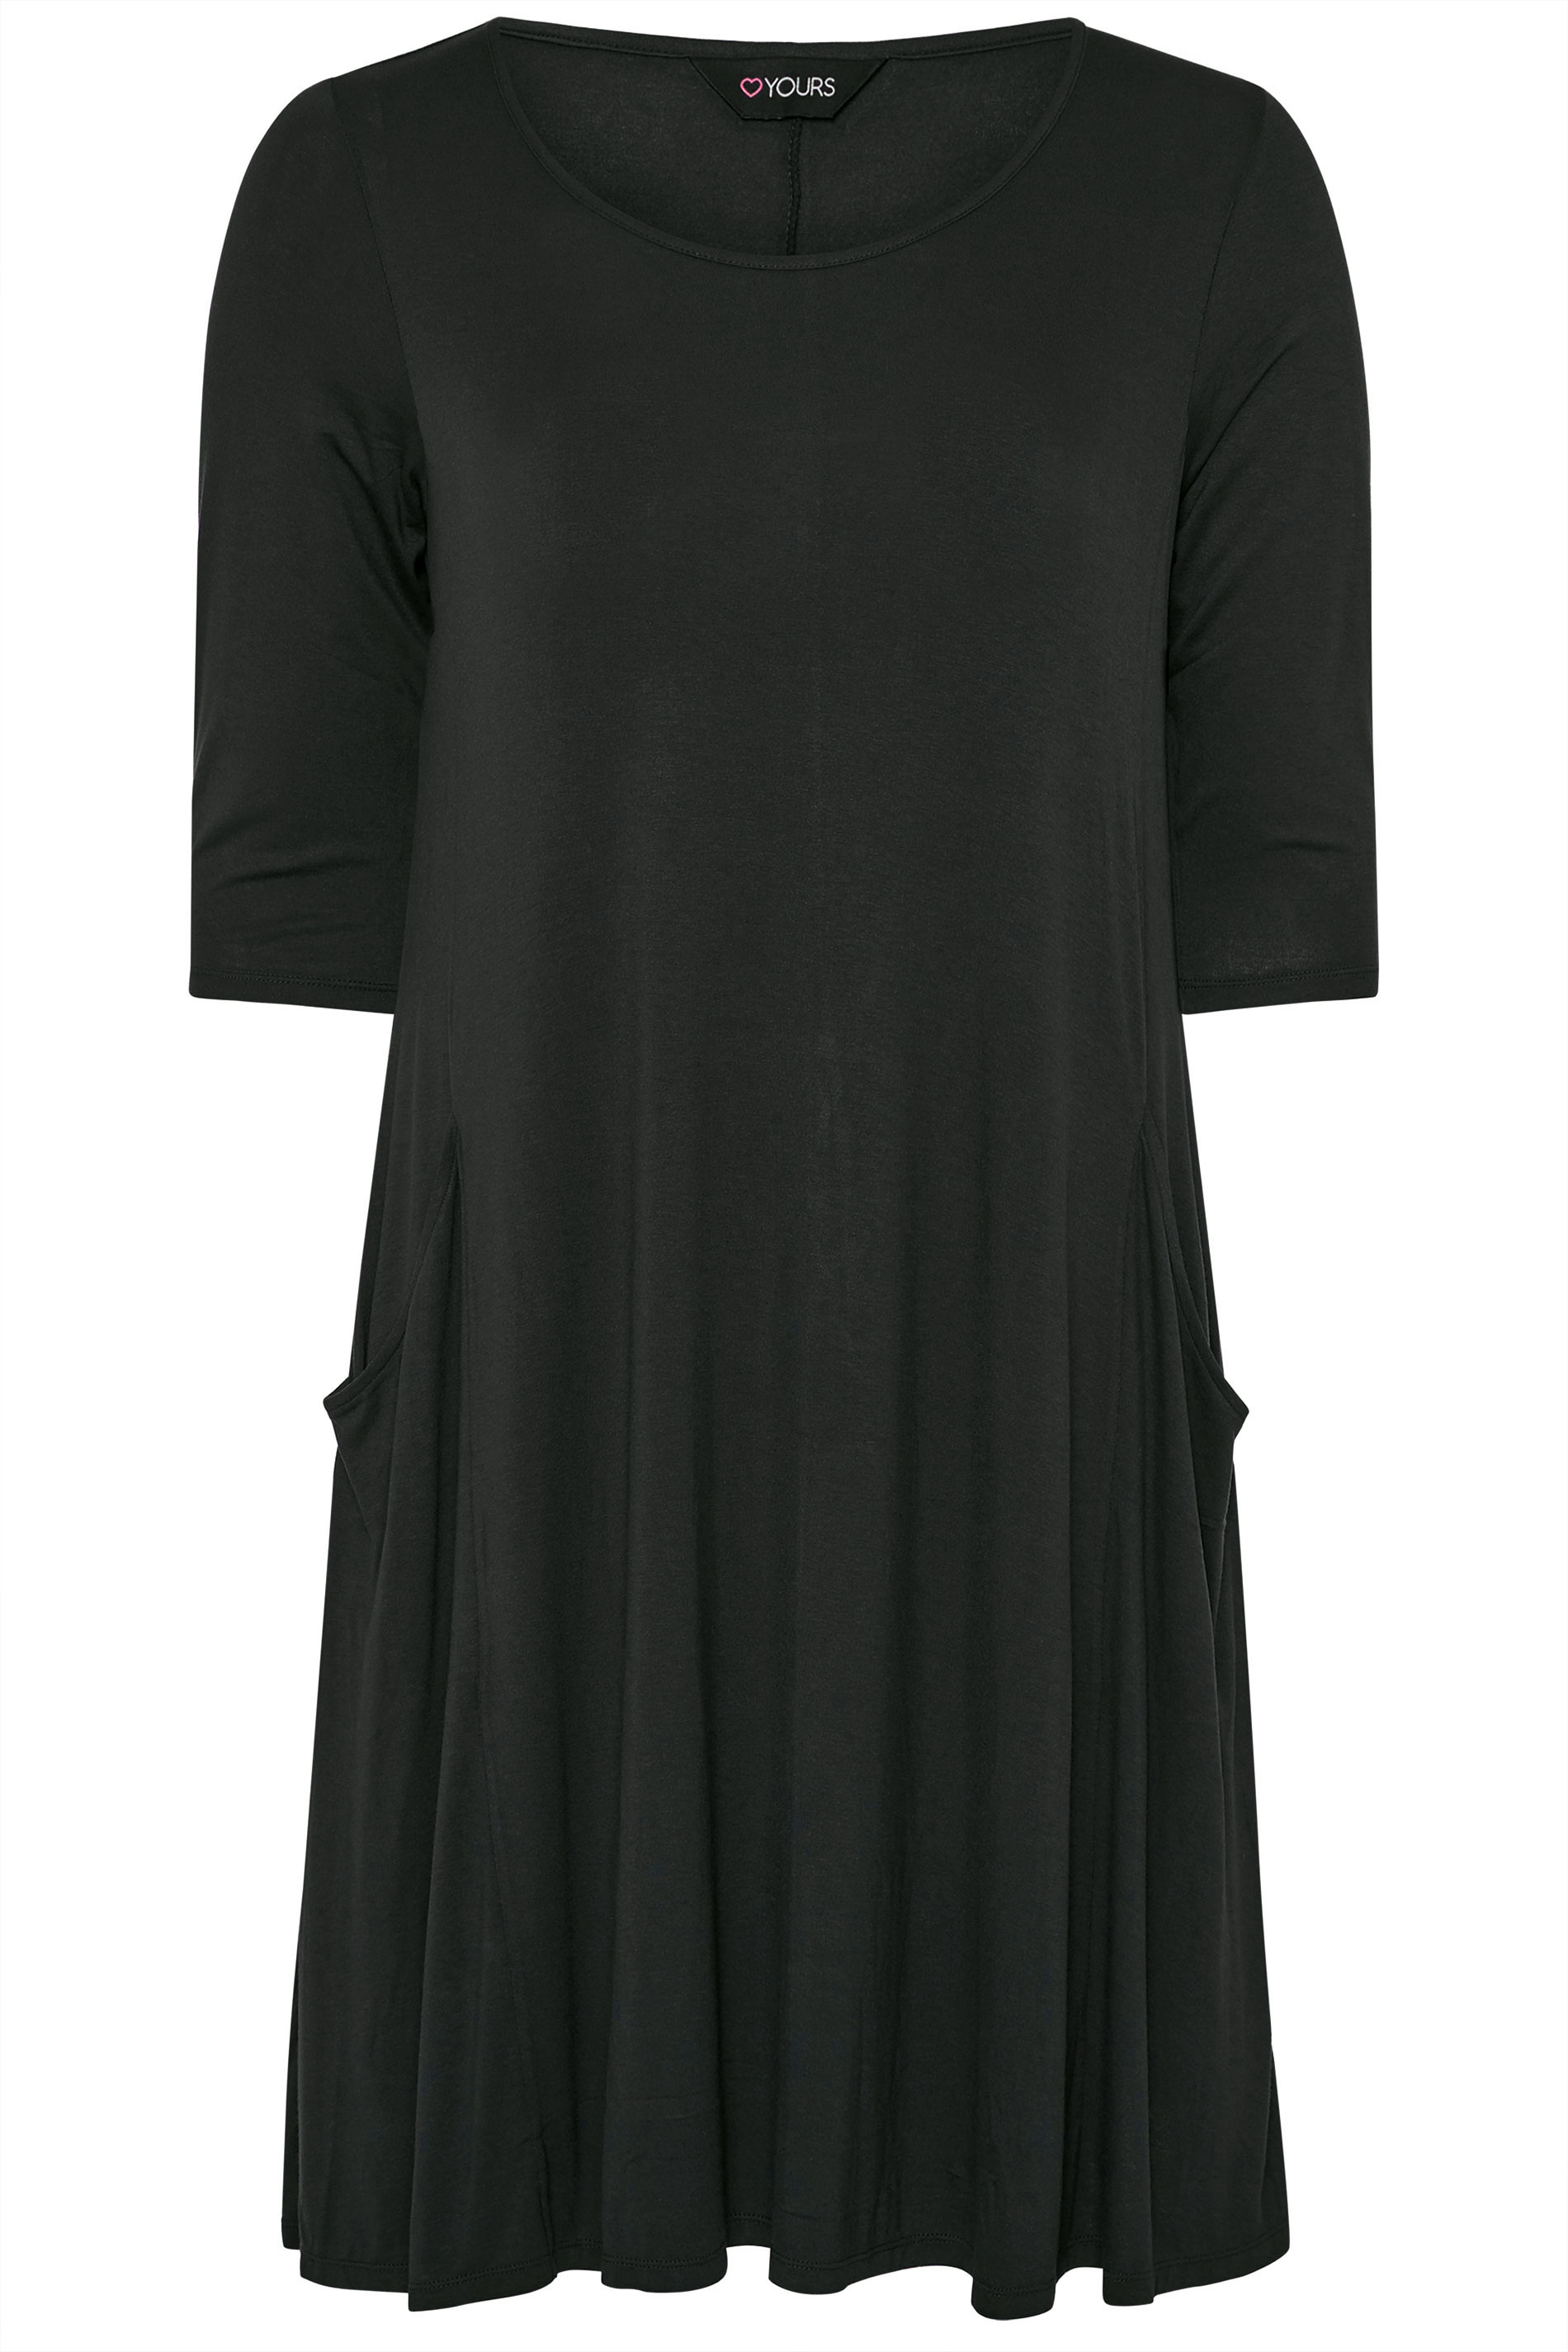 Black Drape Pocket Dress, plus size 16 to 36 | Yours Clothing